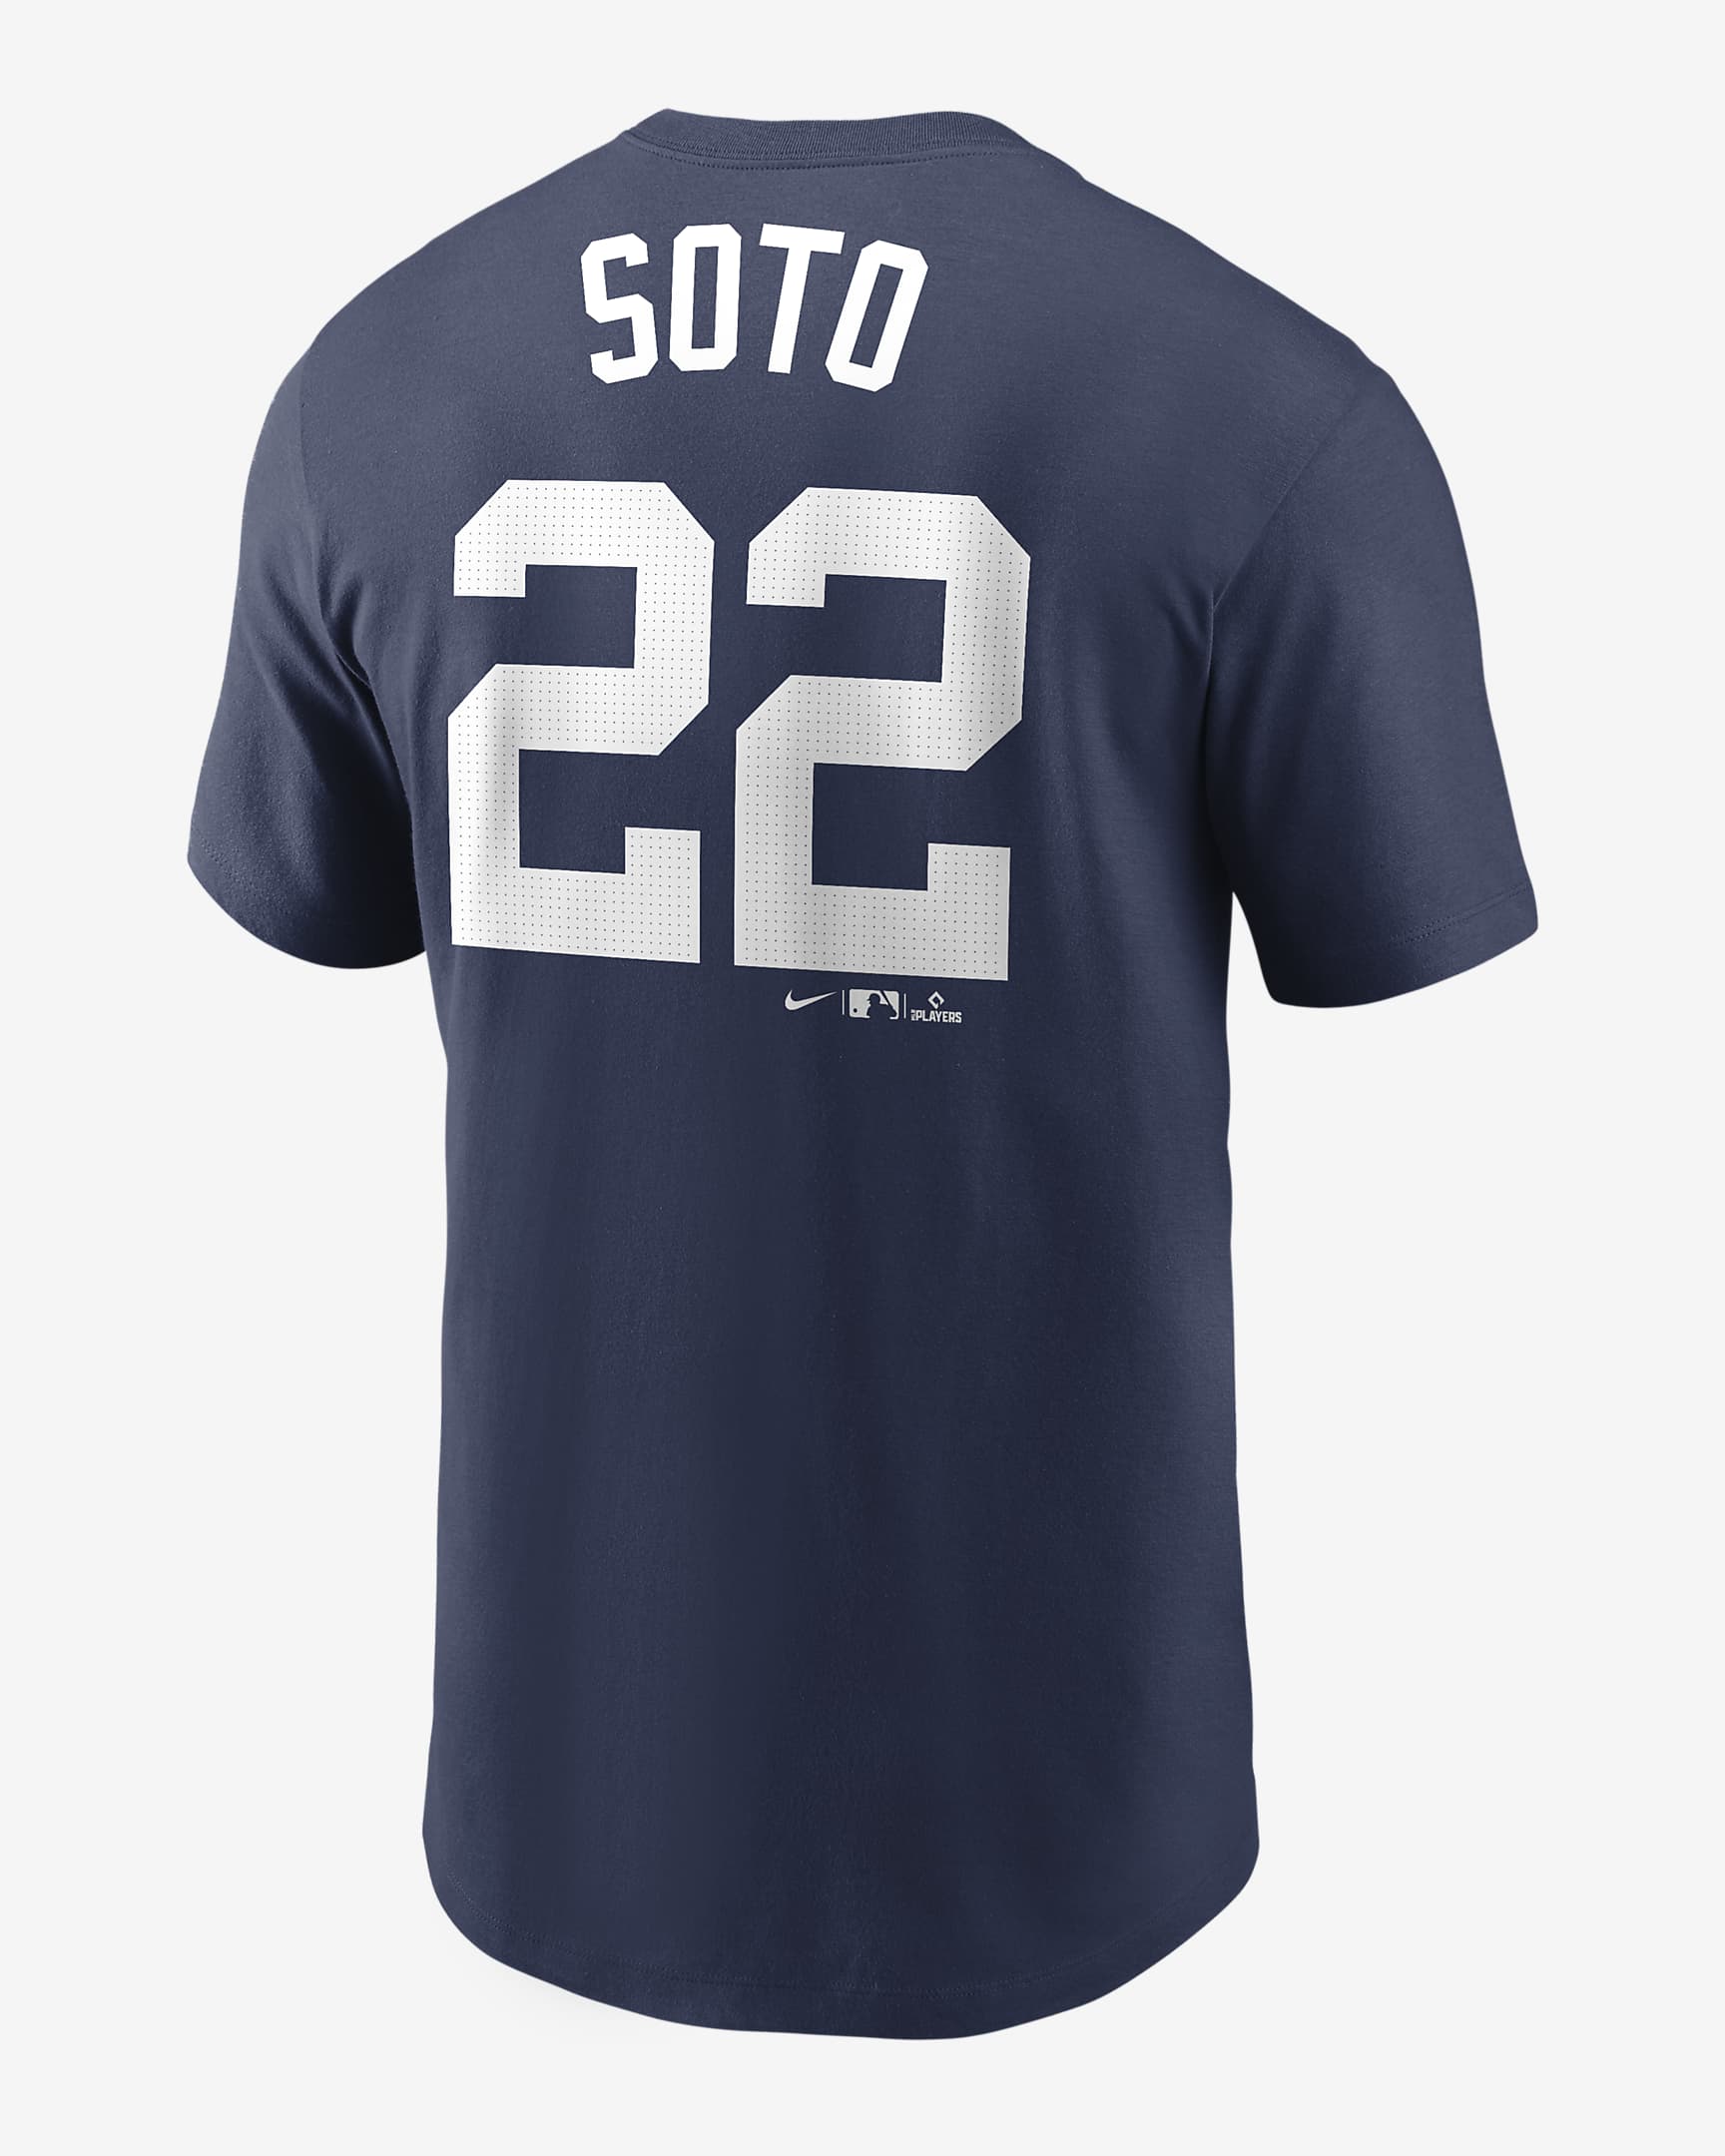 Juan Soto New York Yankees Fuse Men's Nike MLB T-Shirt. Nike.com